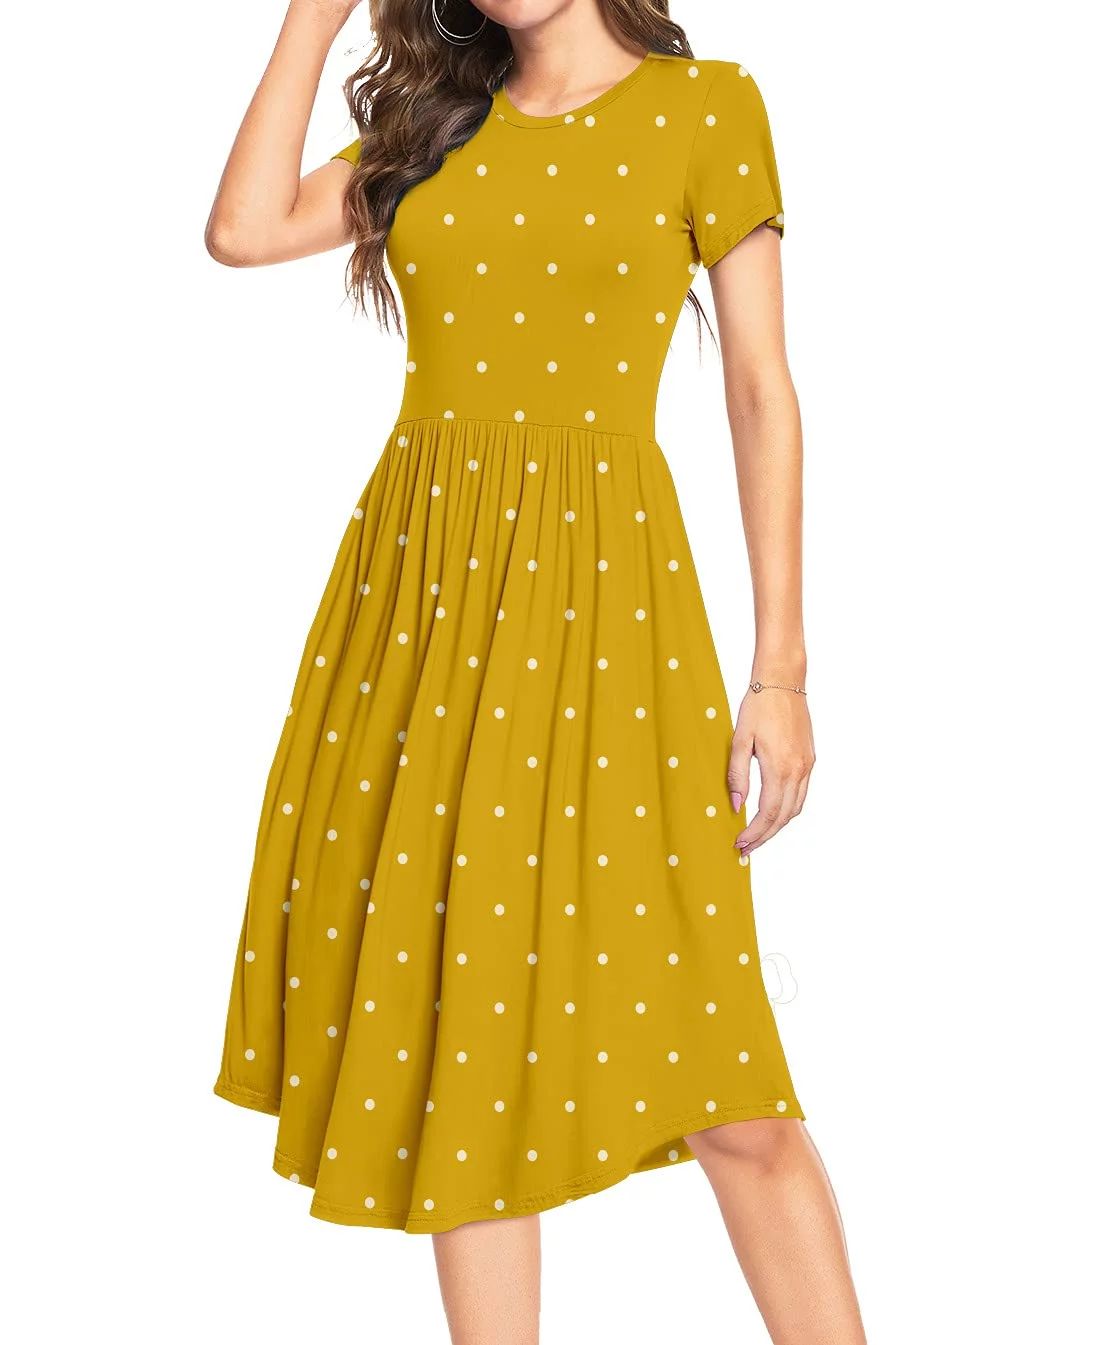 MLANM Women Short Sleeve Polka Dot Midi Casual Swing Pleated Empire Waist Dress with Pockets, L D... | Walmart (US)